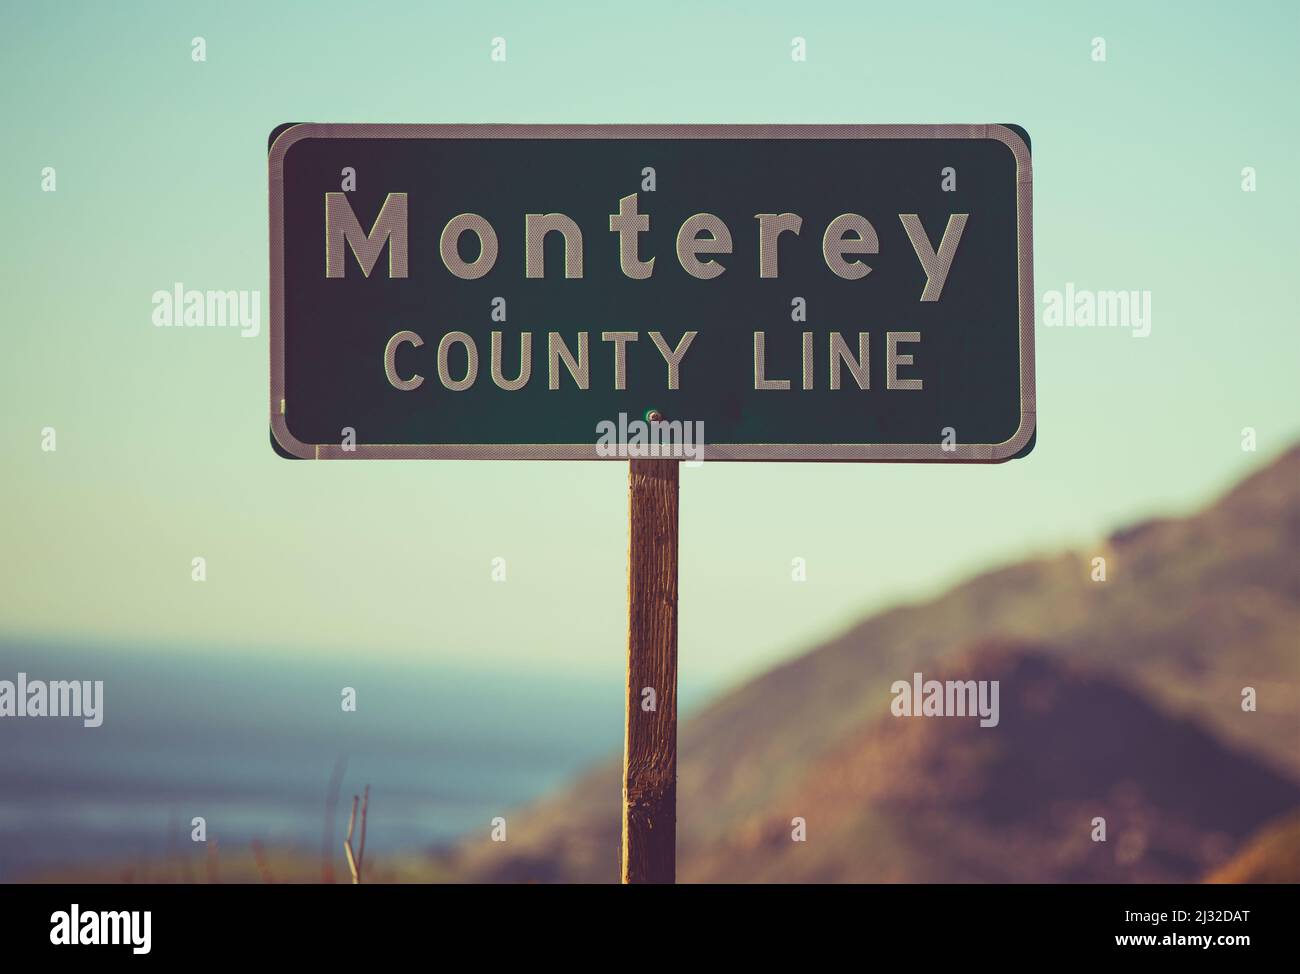 Monterey County Line Schild Entlang Des Berühmten California Coastal Highway 1. Vereinigte Staaten von Amerika. Stockfoto